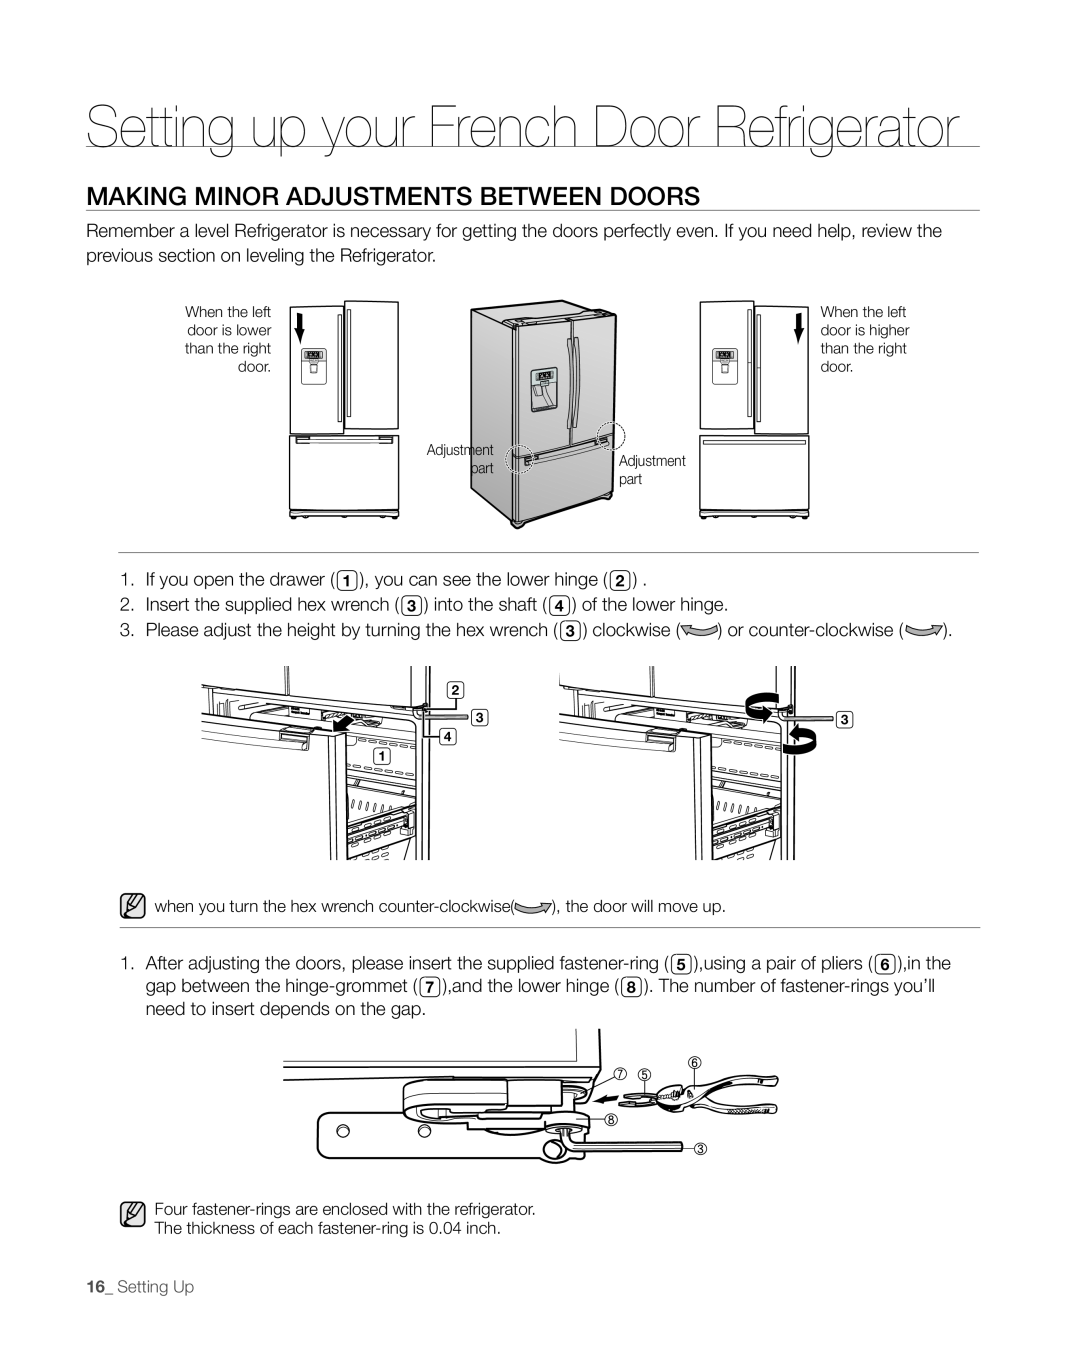 Sears RFG297AA manual Making Minor Adjustments Between Doors, Setting up your French Door Refrigerator 